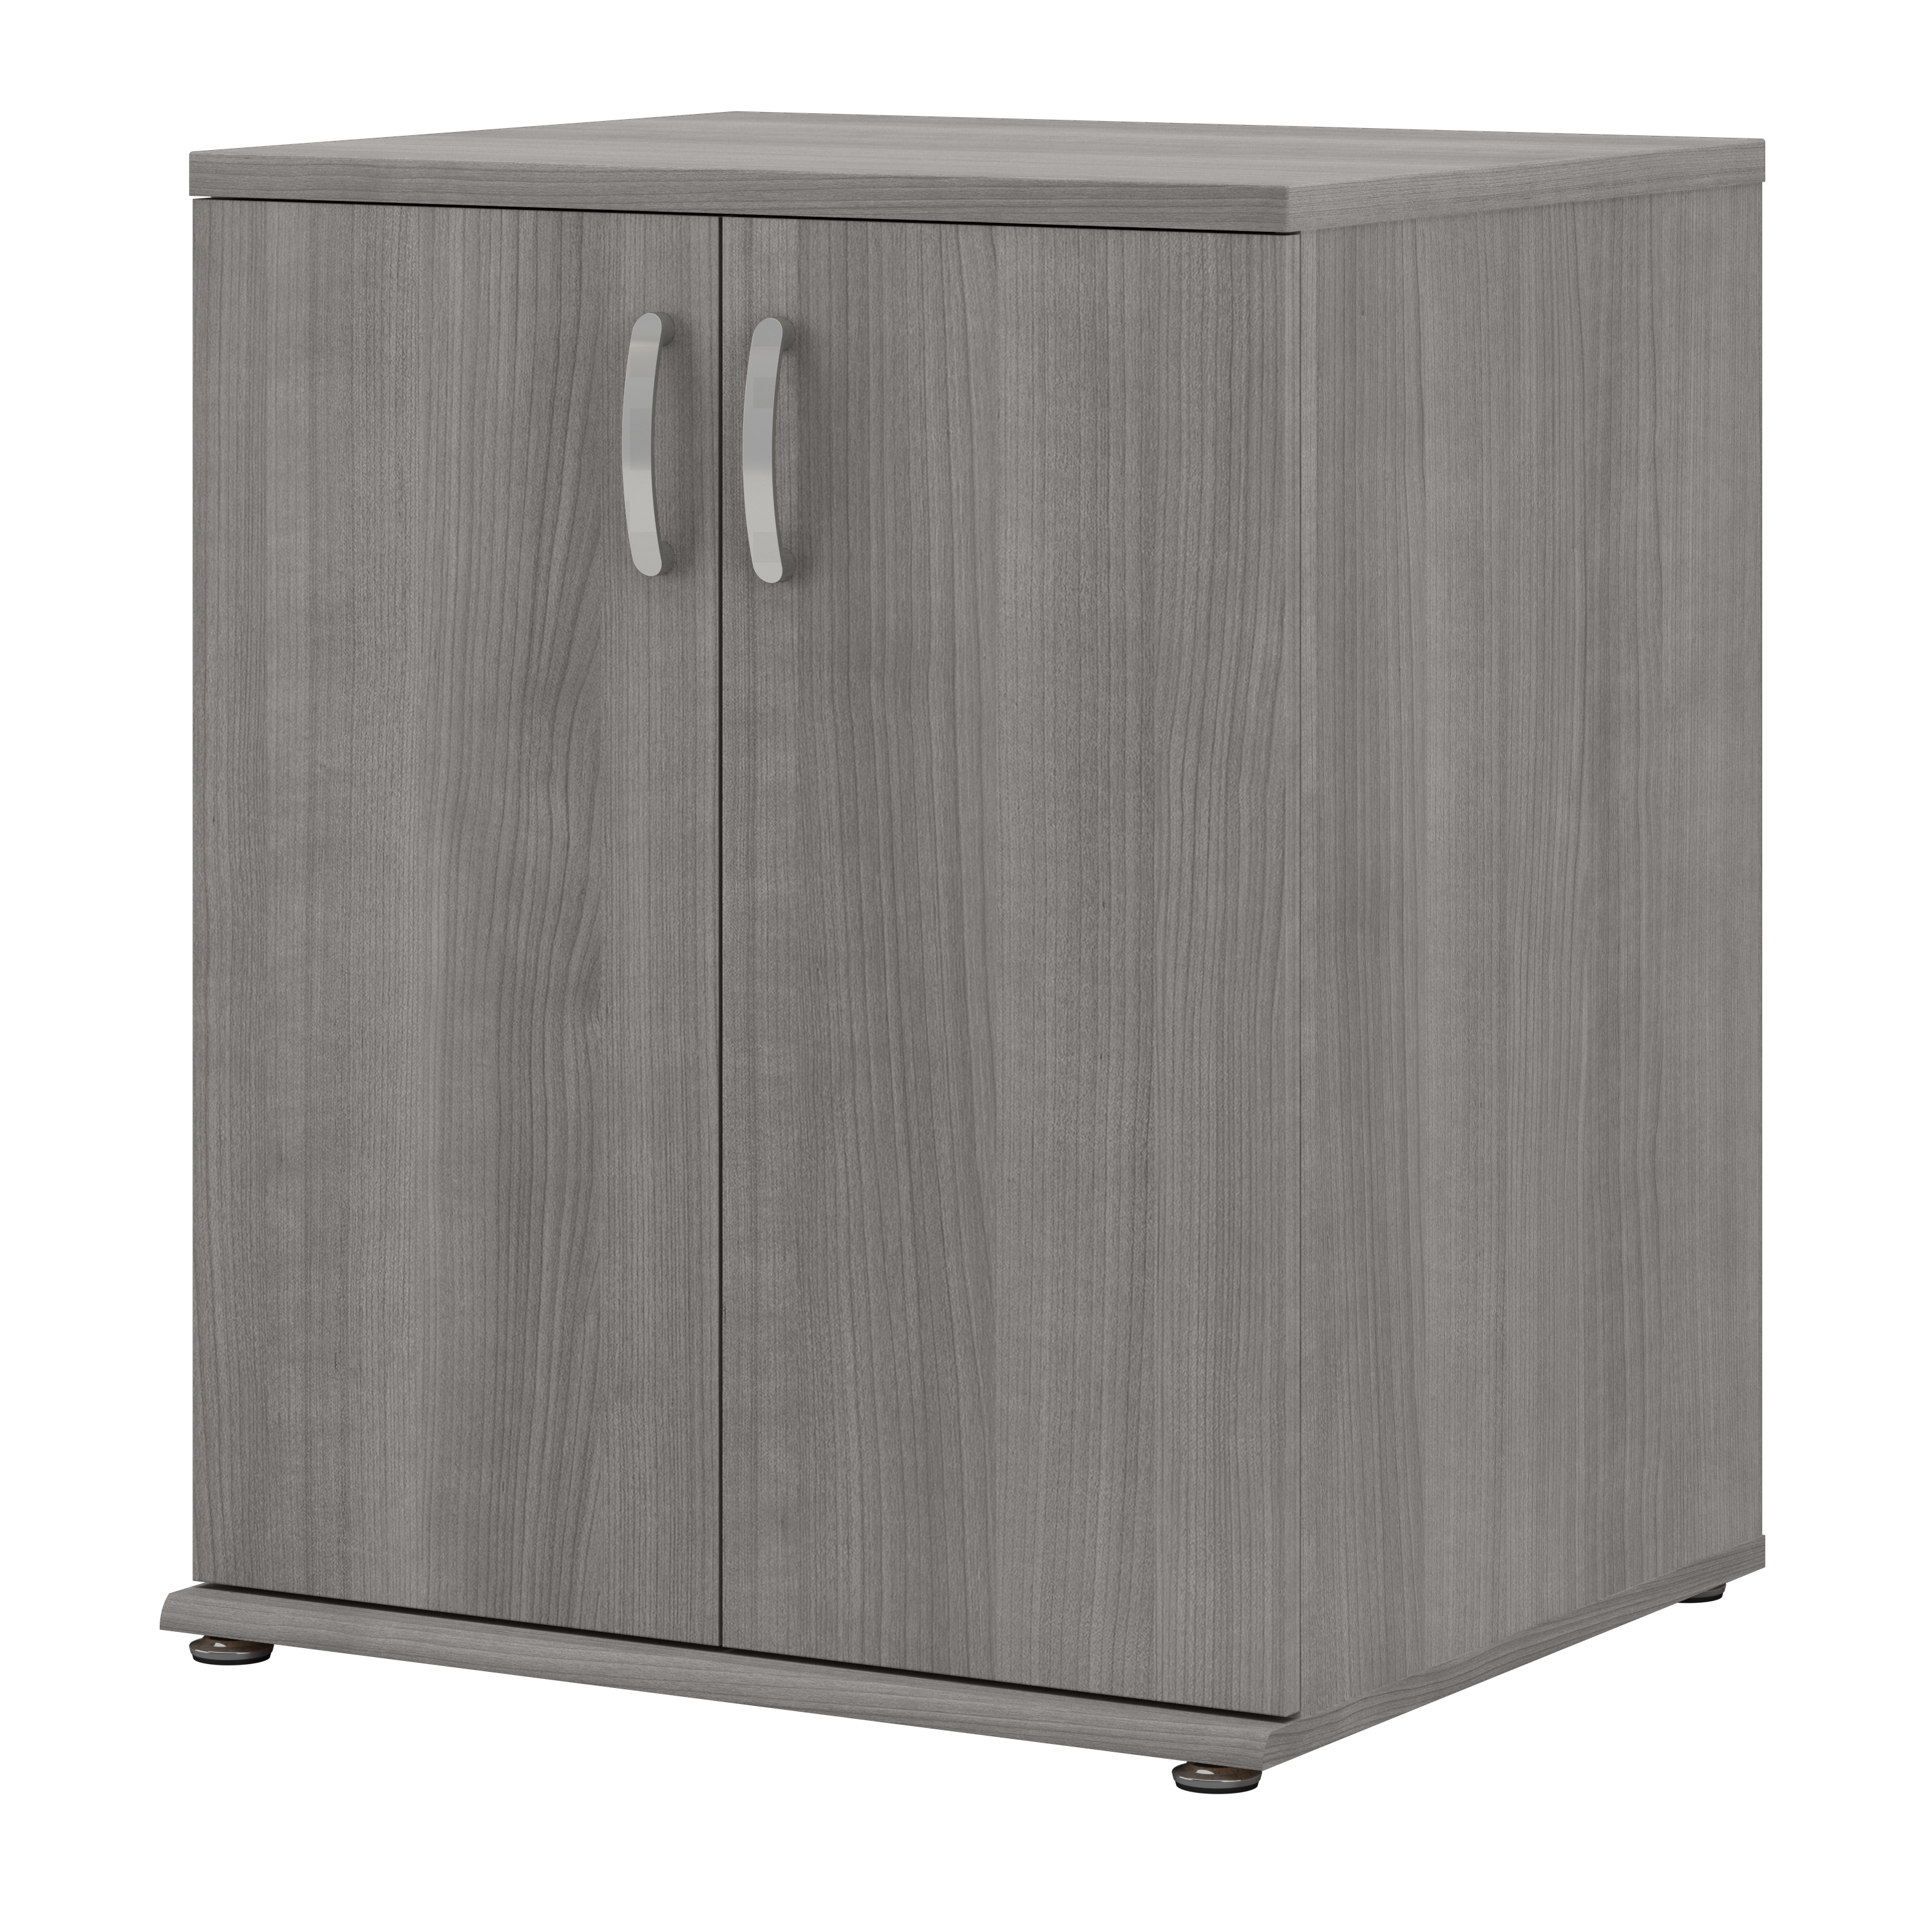 Shop Bush Business Furniture Universal Floor Storage Cabinet with Doors and Shelves 02 UNS128PG #color_platinum gray